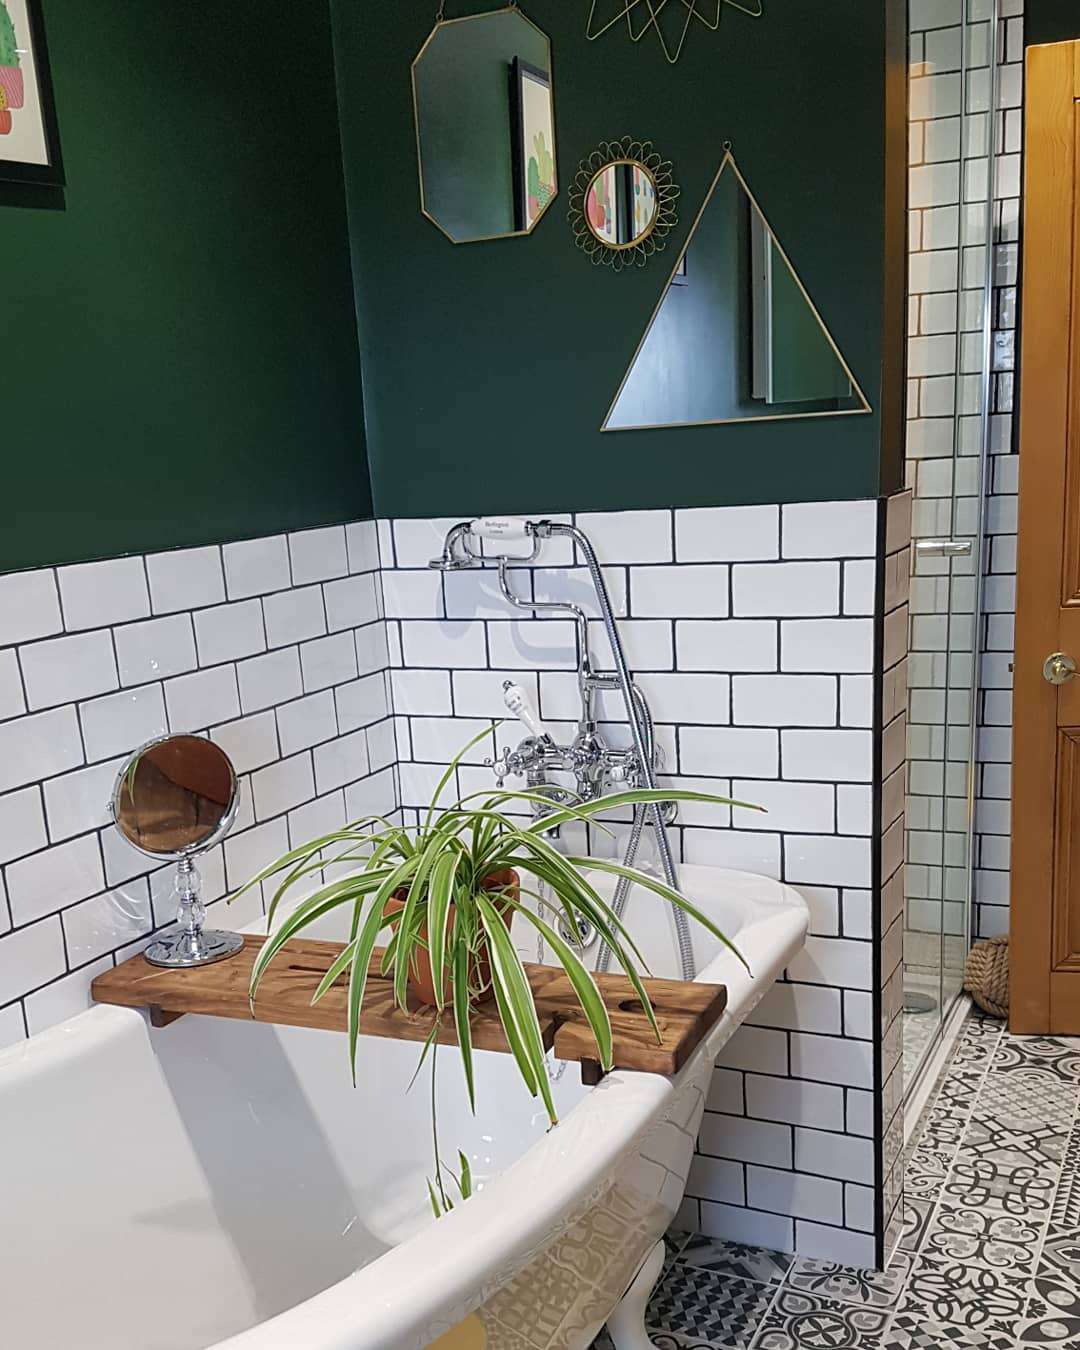 Salle de bain avec murs peints en vert